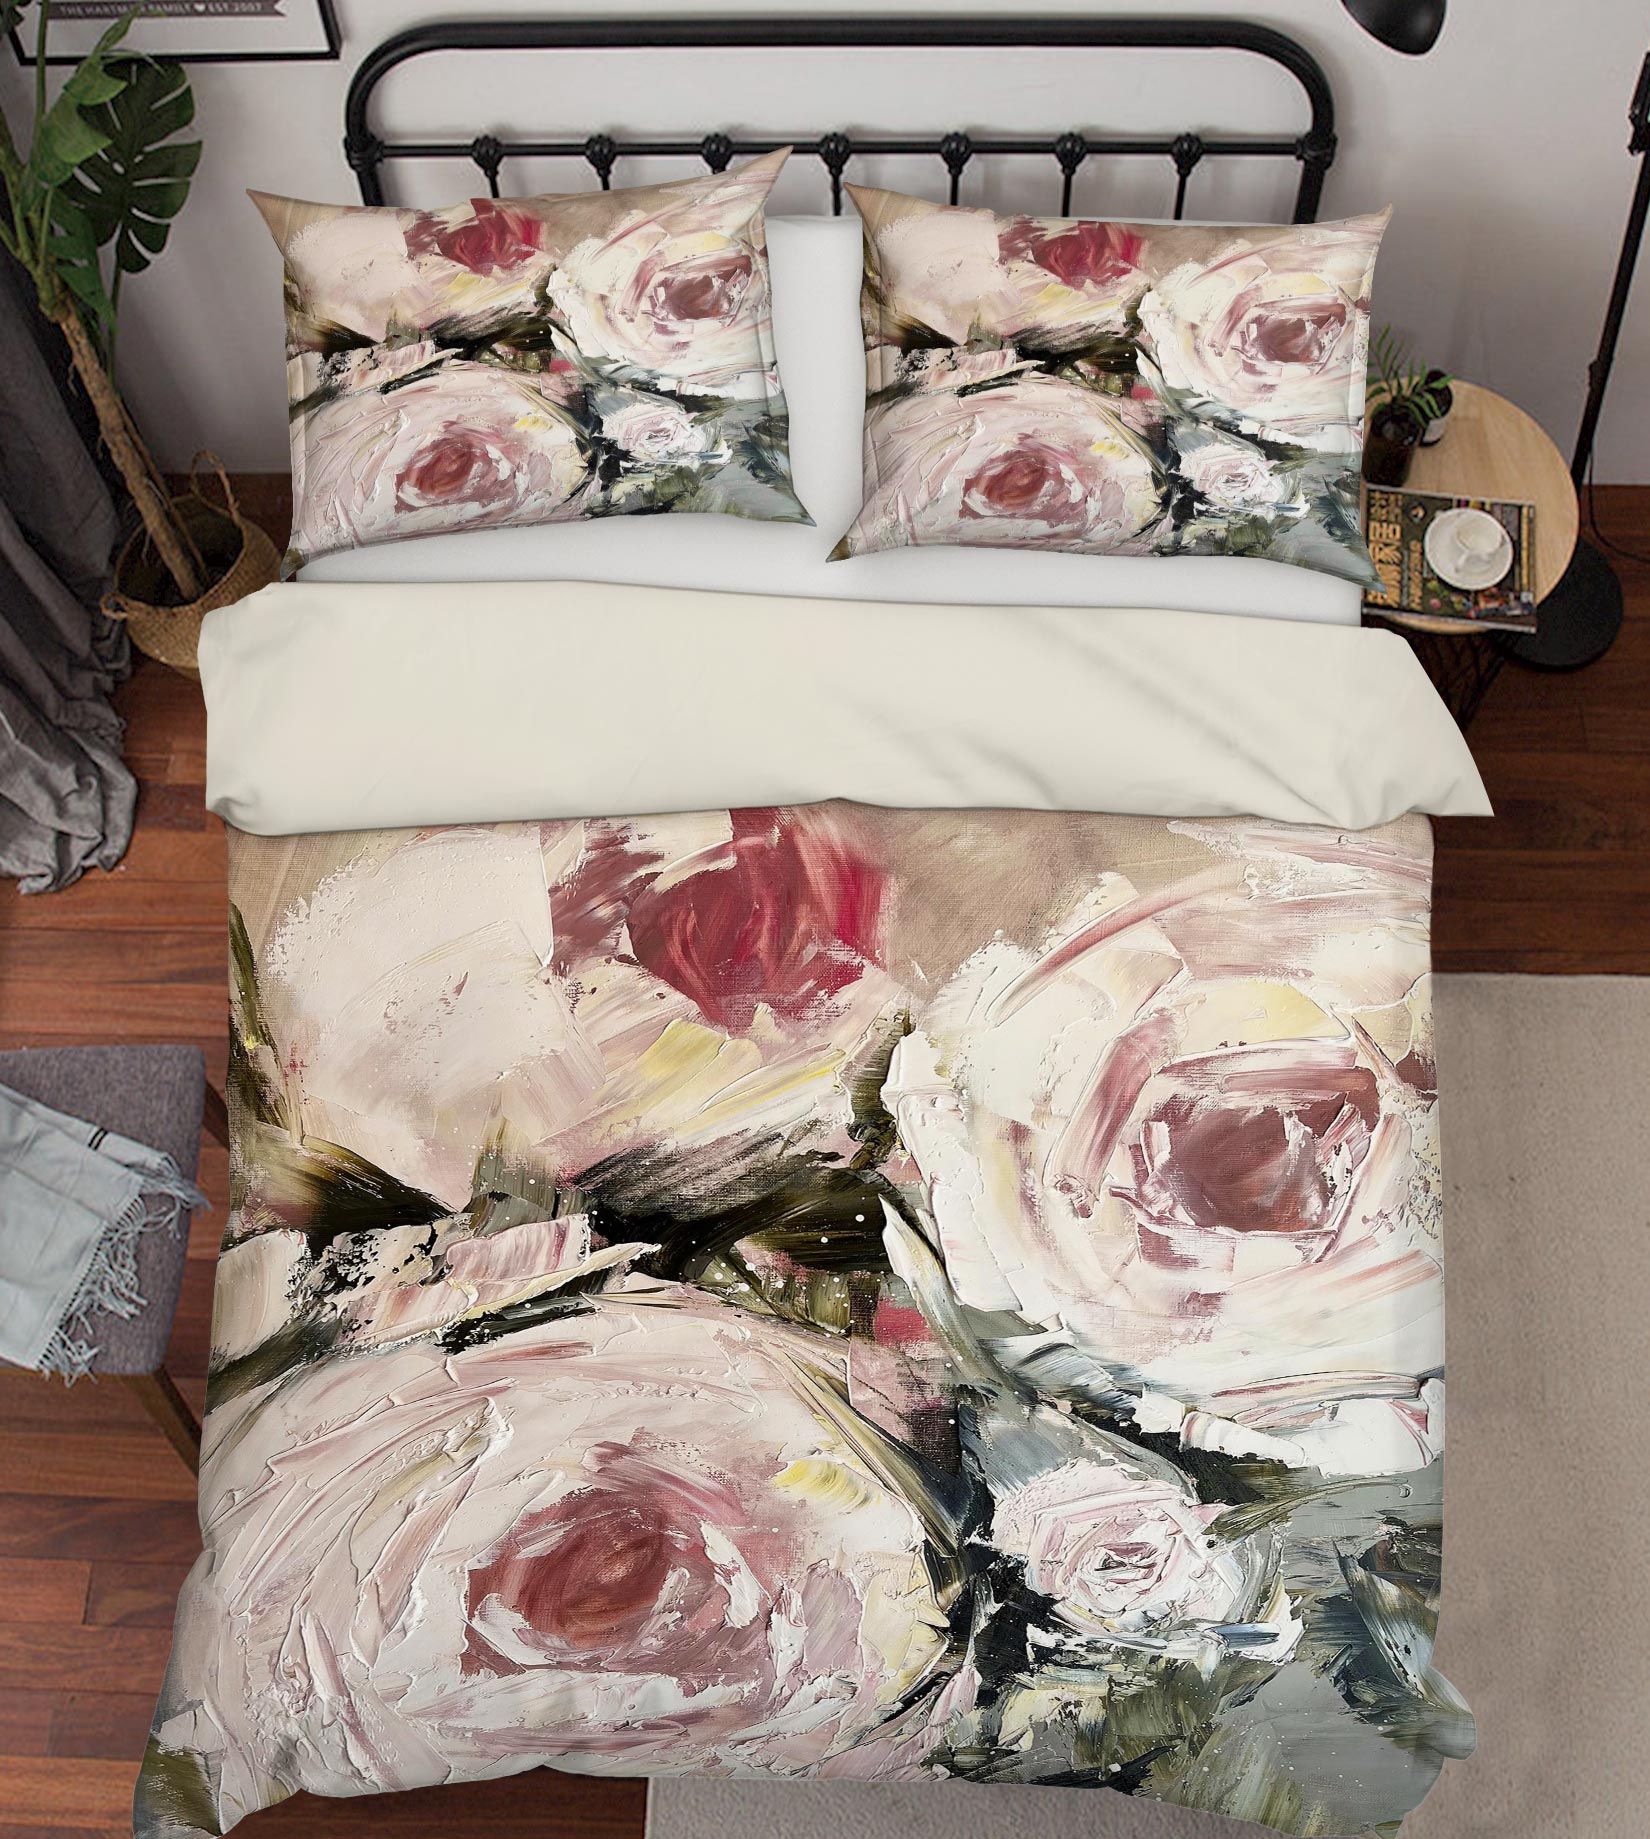 3D Pigment Rose 461 Skromova Marina Bedding Bed Pillowcases Quilt